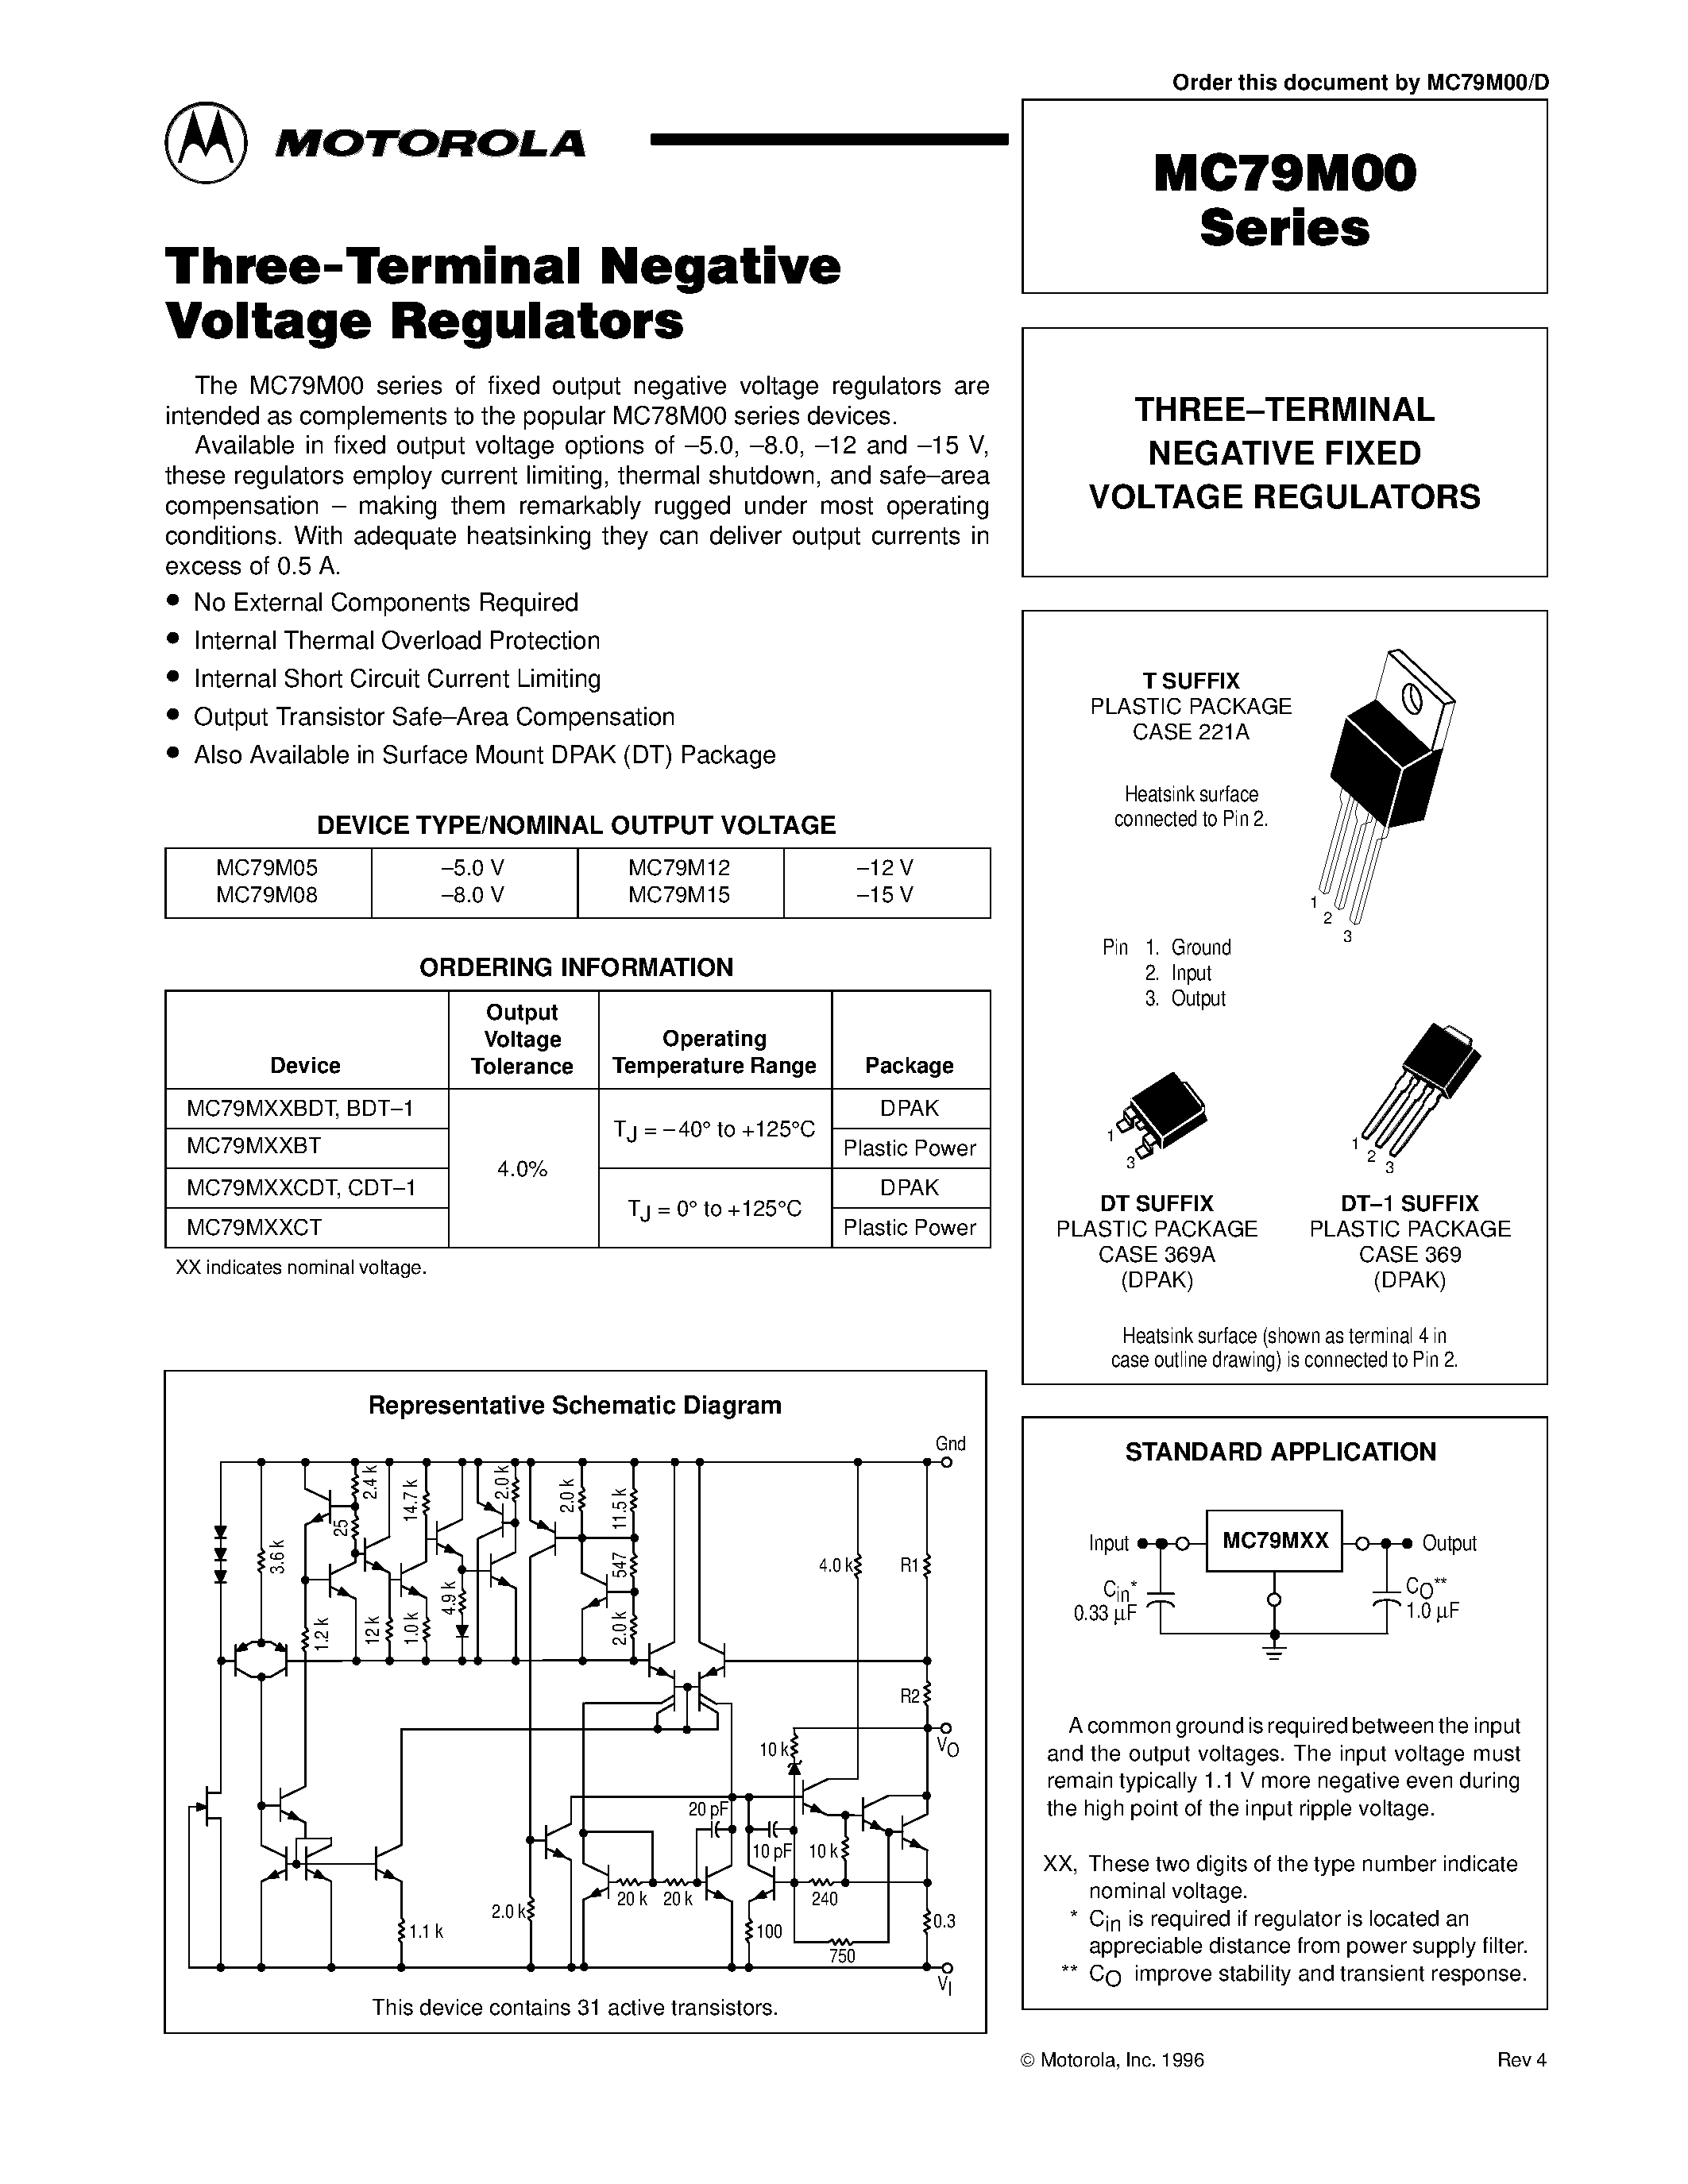 Datasheet MC79M08CT - THREE-TERMINAL NEGATIVE FIXED VOLTAGE REGULATORS page 1